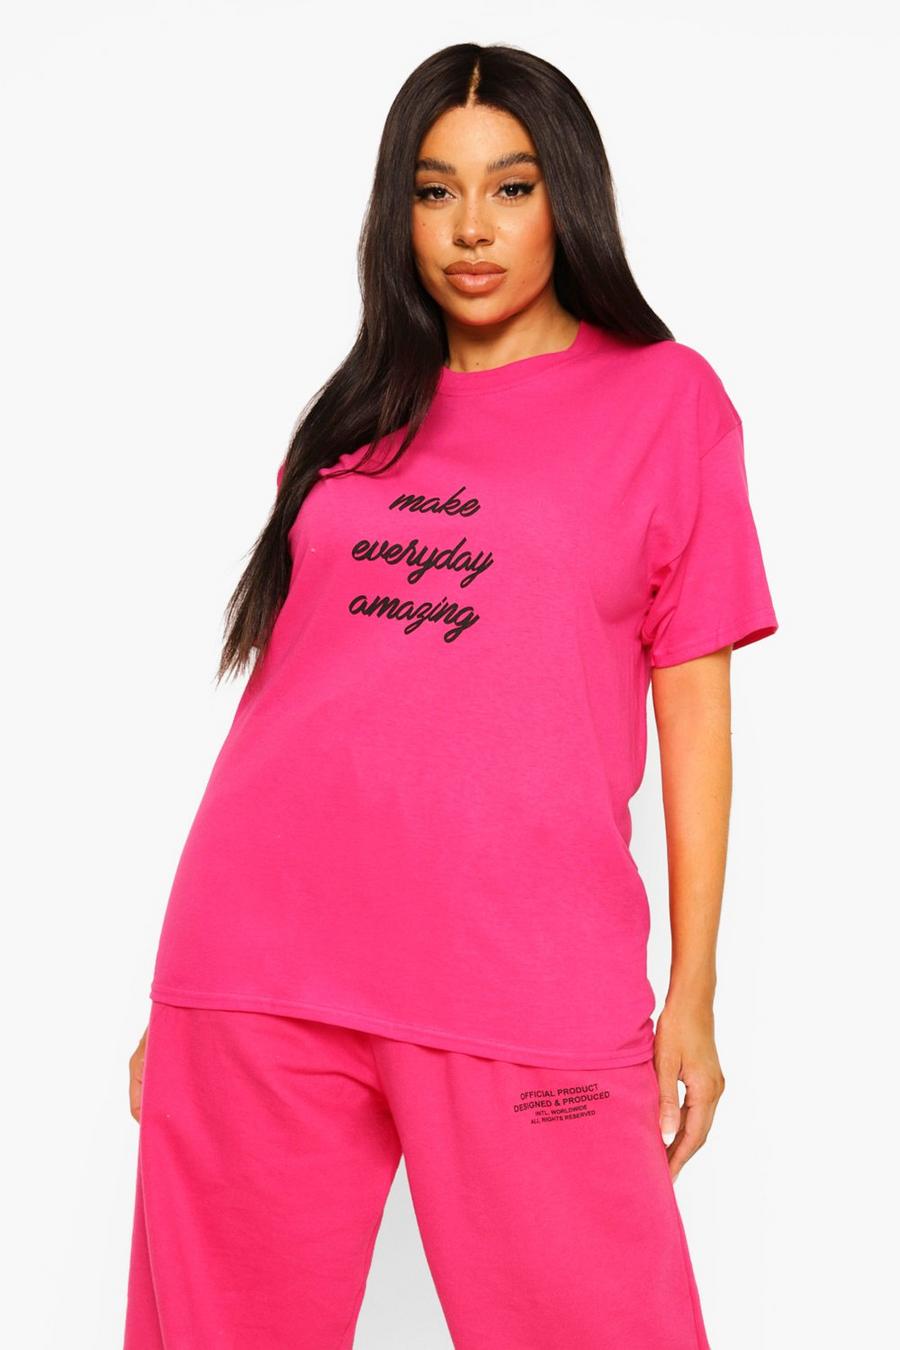 T-shirt Plus Size con slogan Amazing, Pink image number 1